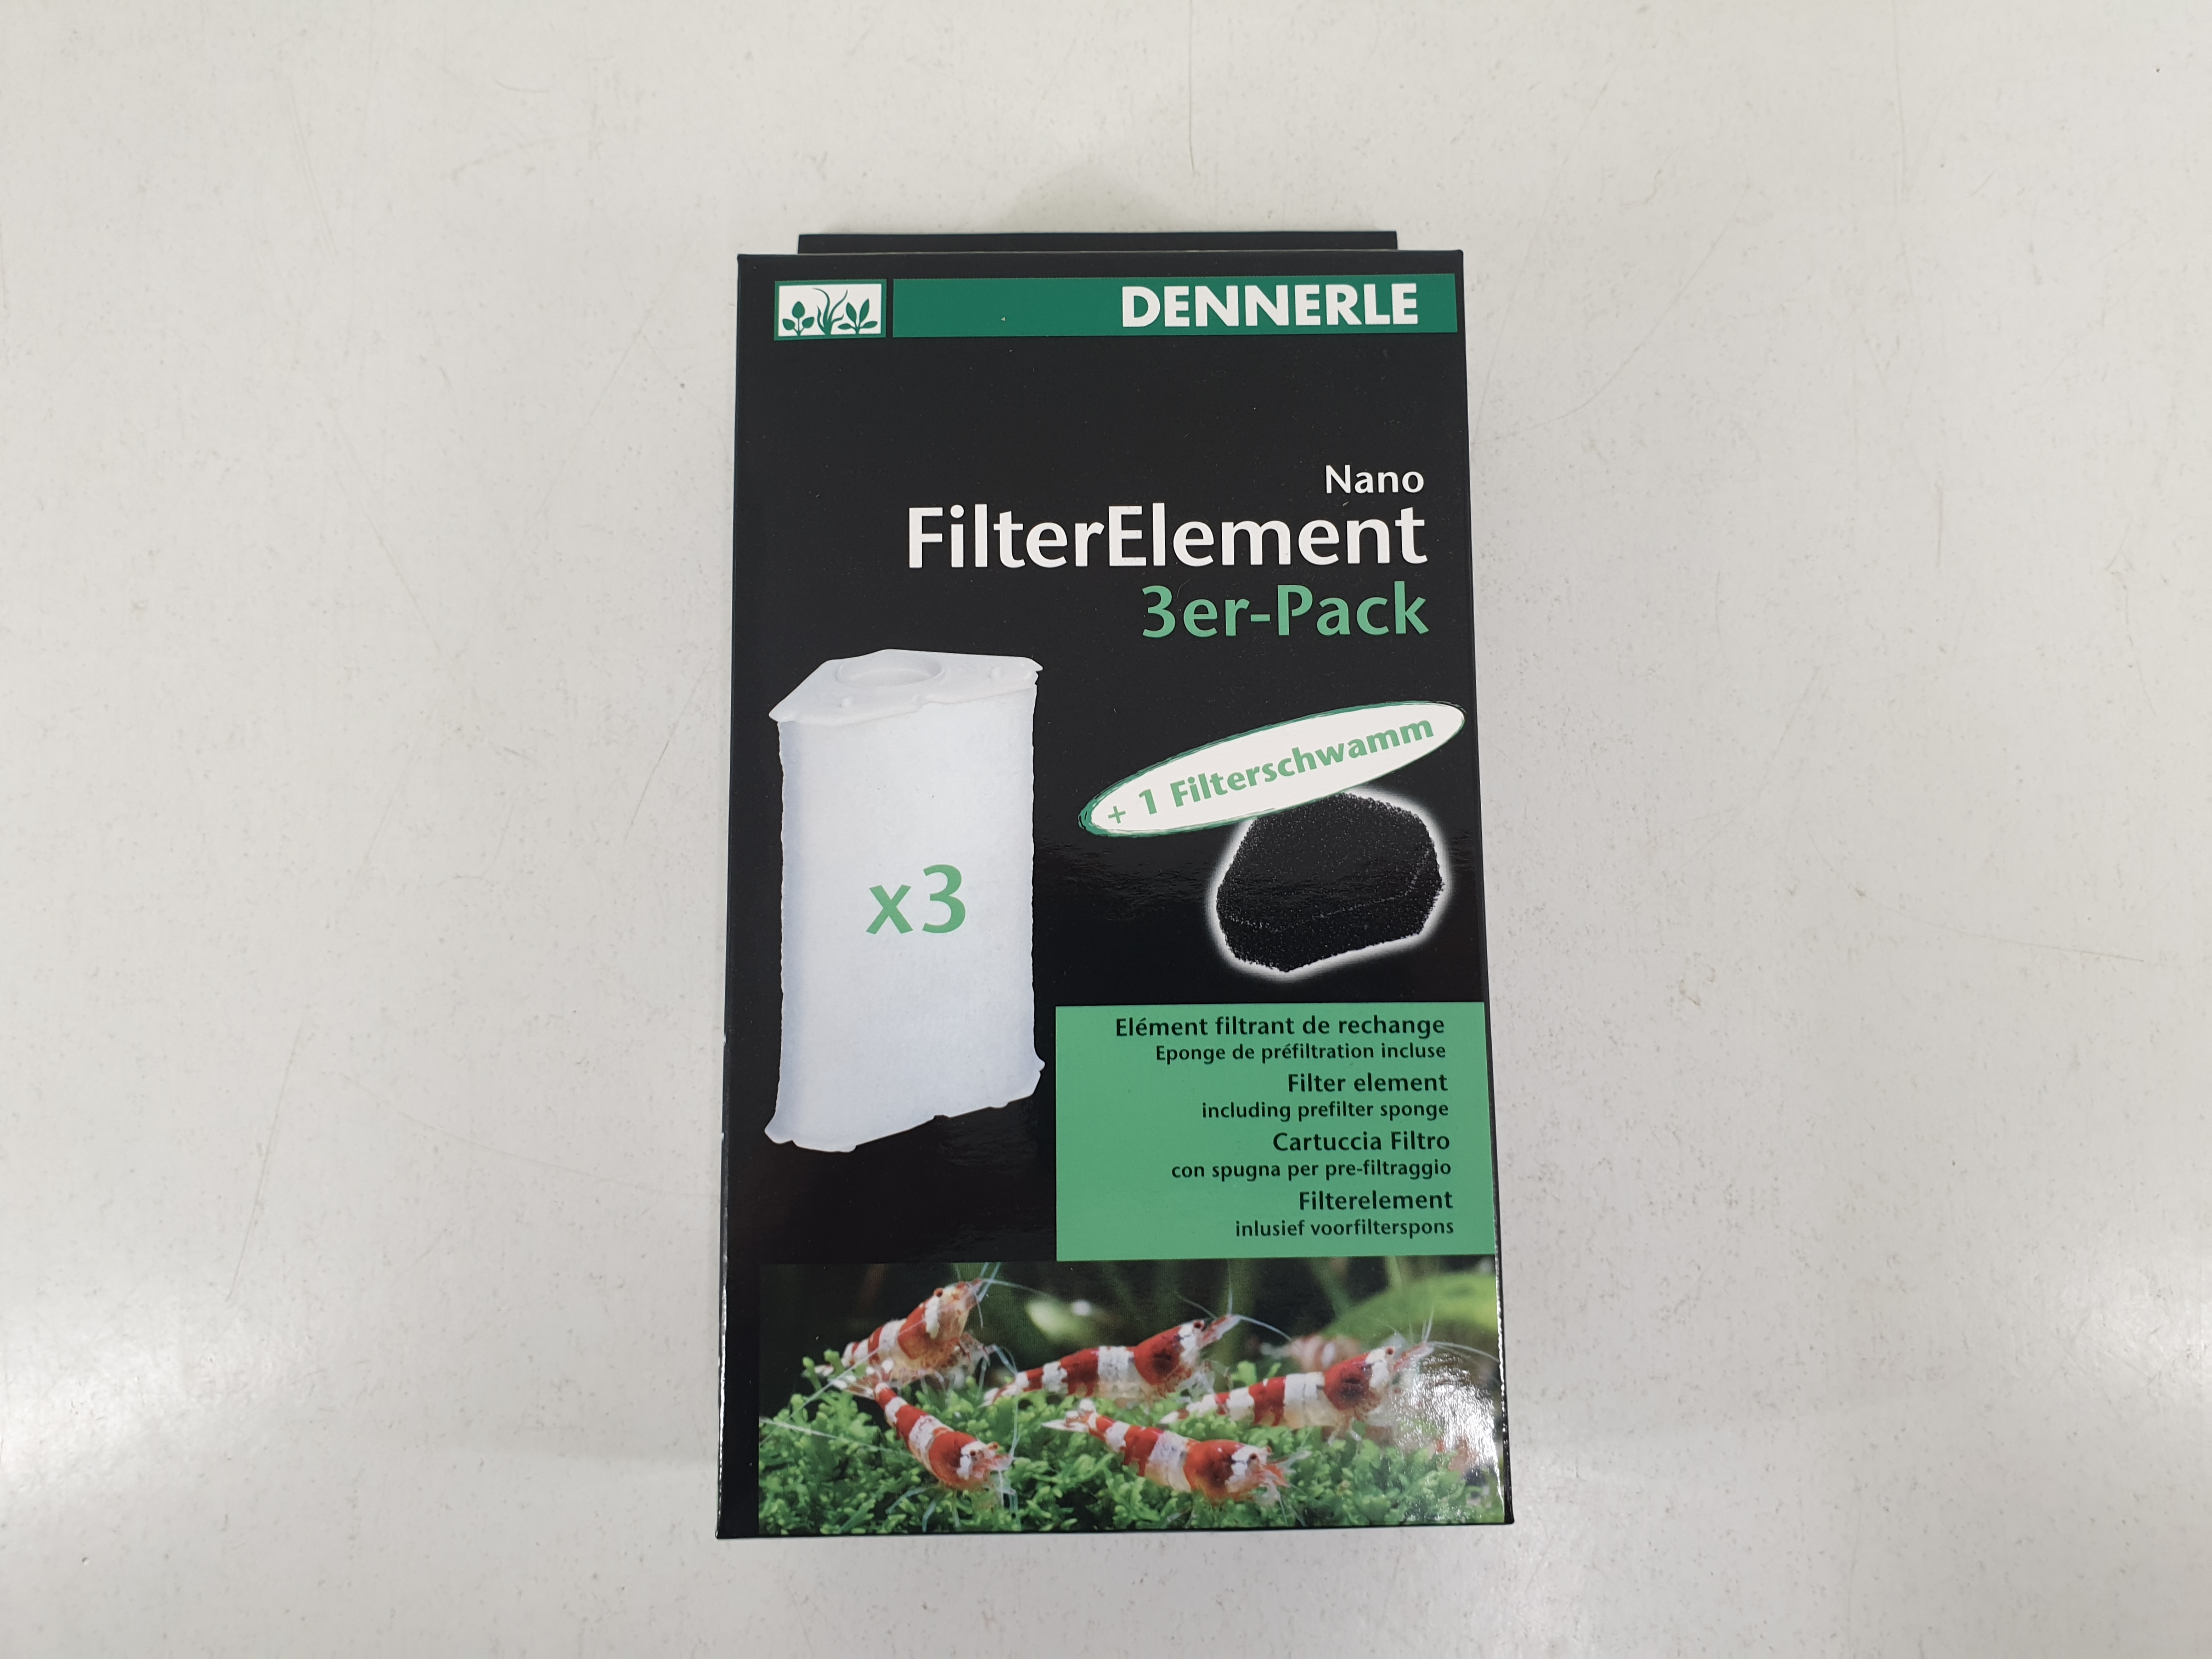 Dennerle Nano FilterElement 3er-Pack + 1 Filterschwamm - für Nano Eckfilter